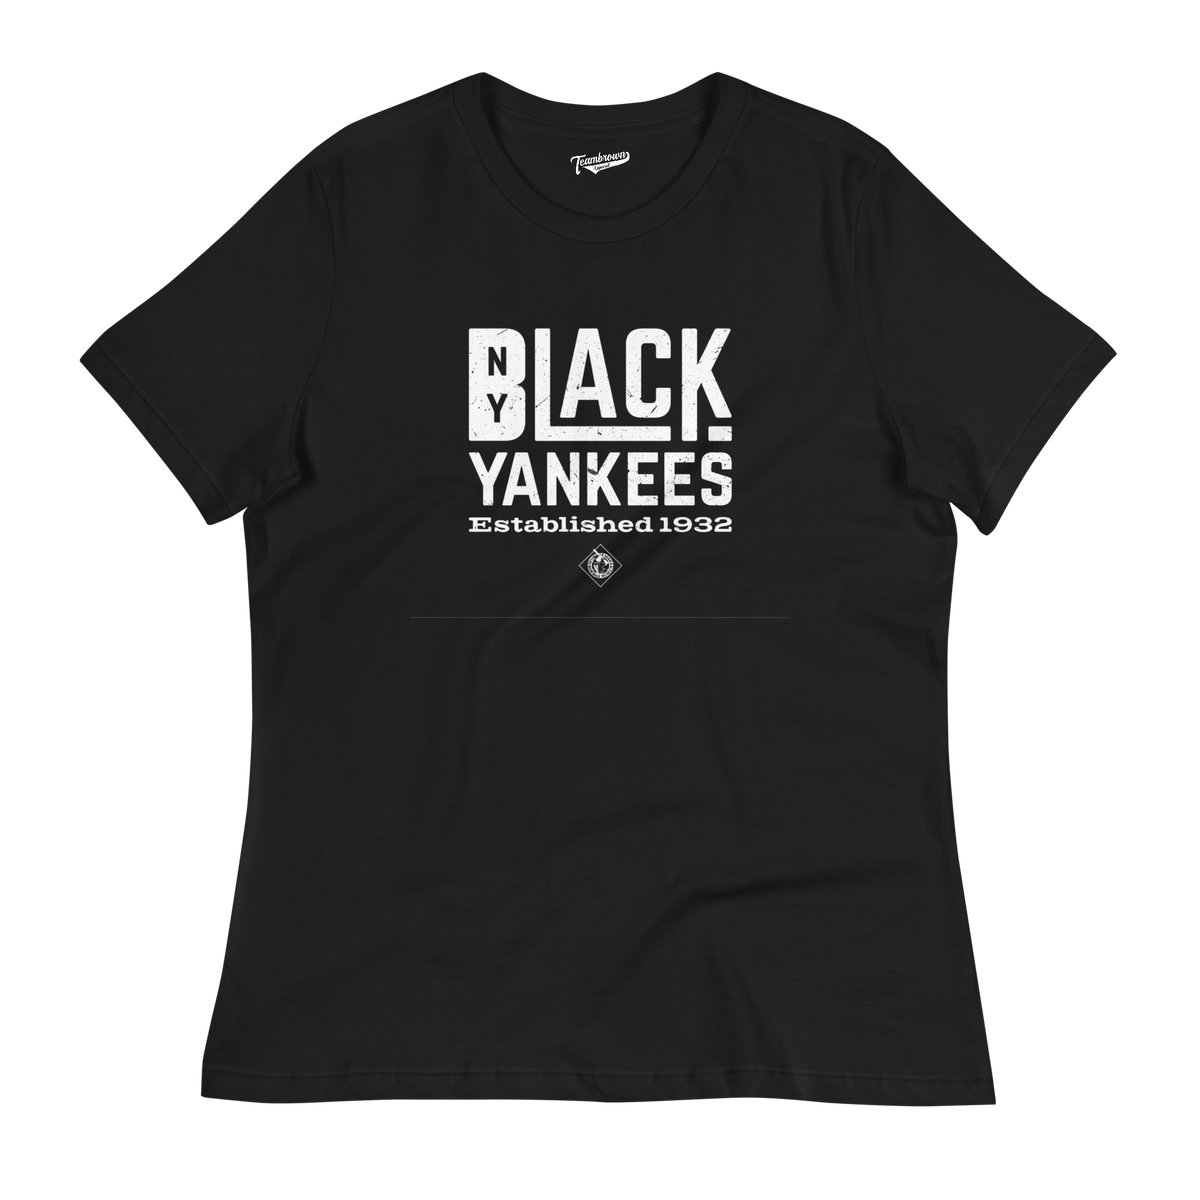 New York Black Yankees - Est 1932 - Women's Relaxed Fit T-Shirt